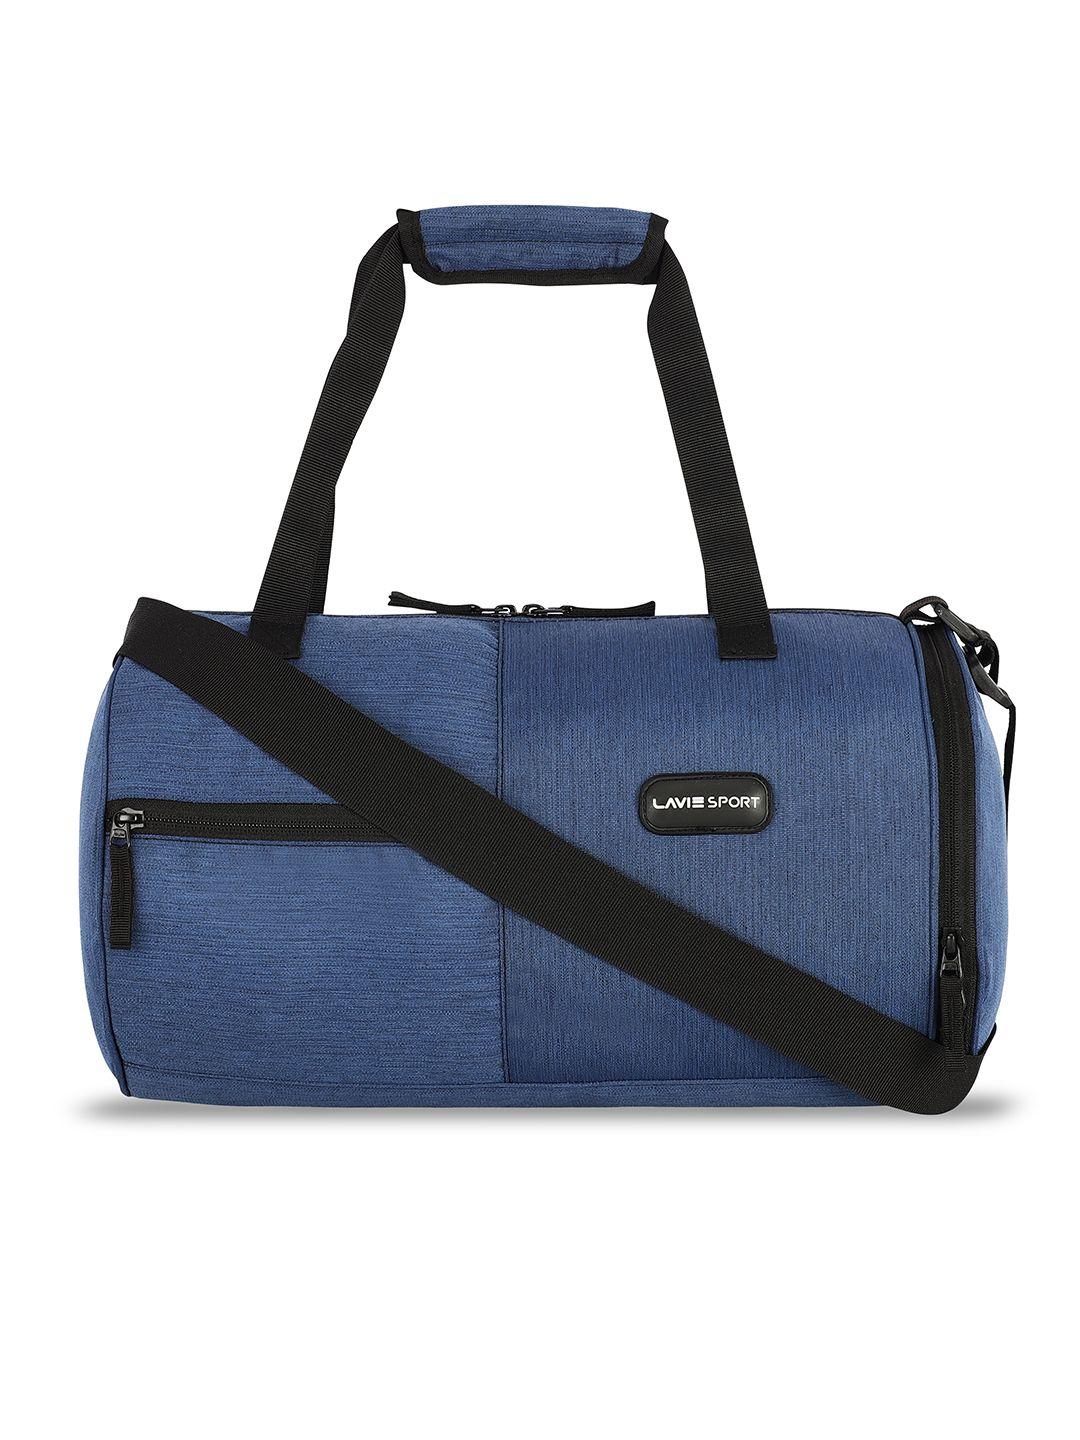 lavie sport unisex gym duffel bag with shoe compartment